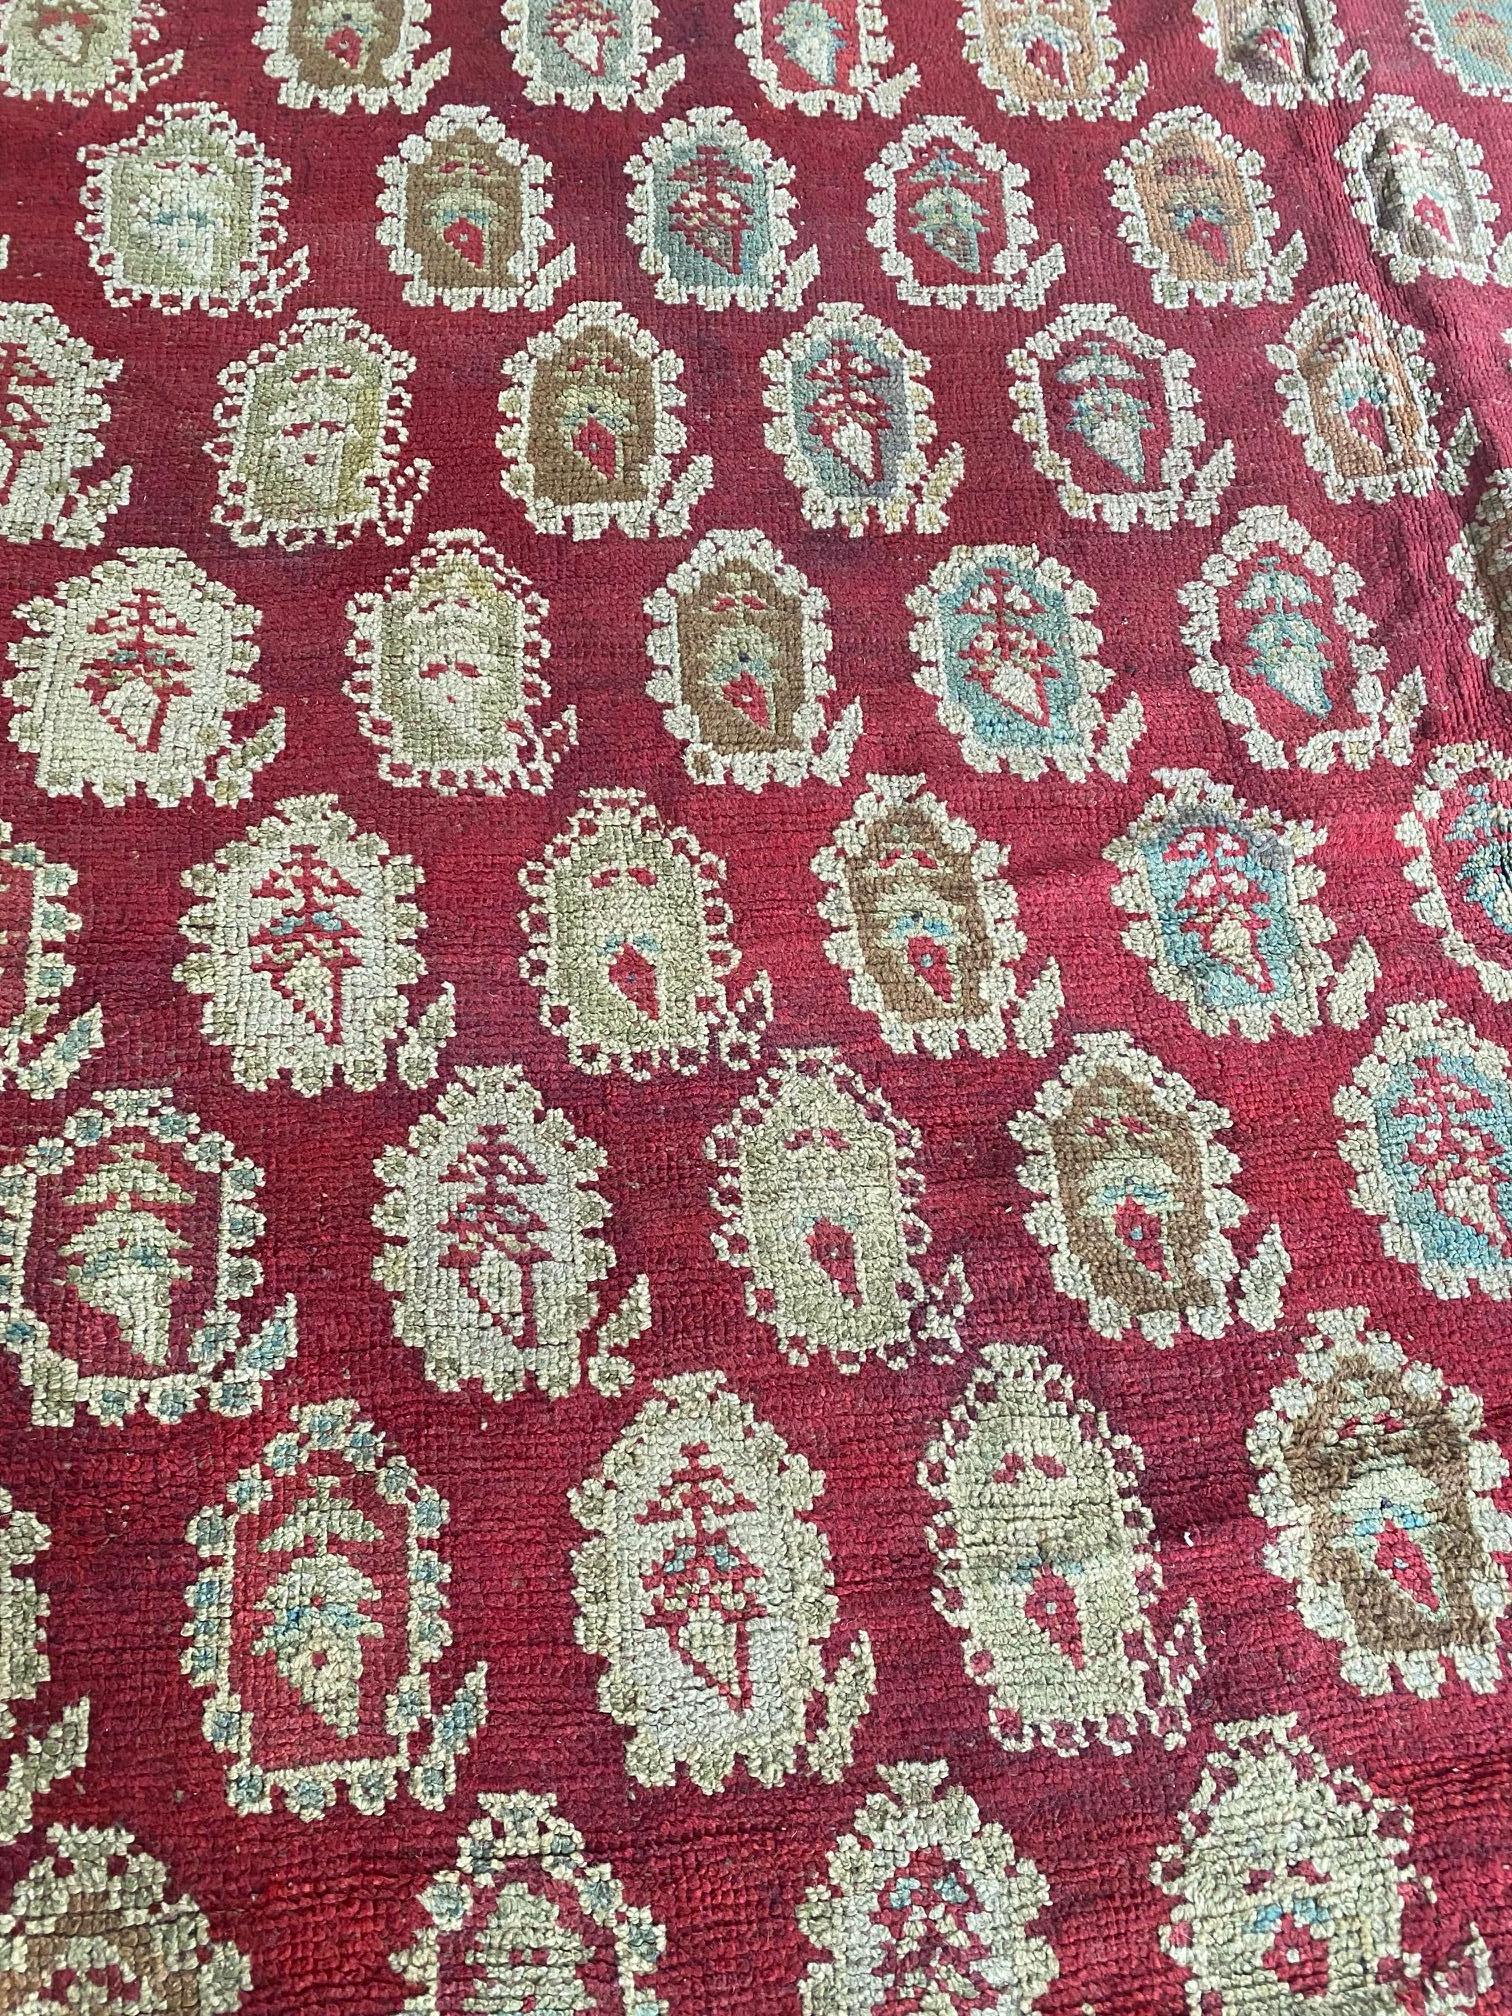 19th Century Turkish Oushak Red Wool Carpet For Sale 1